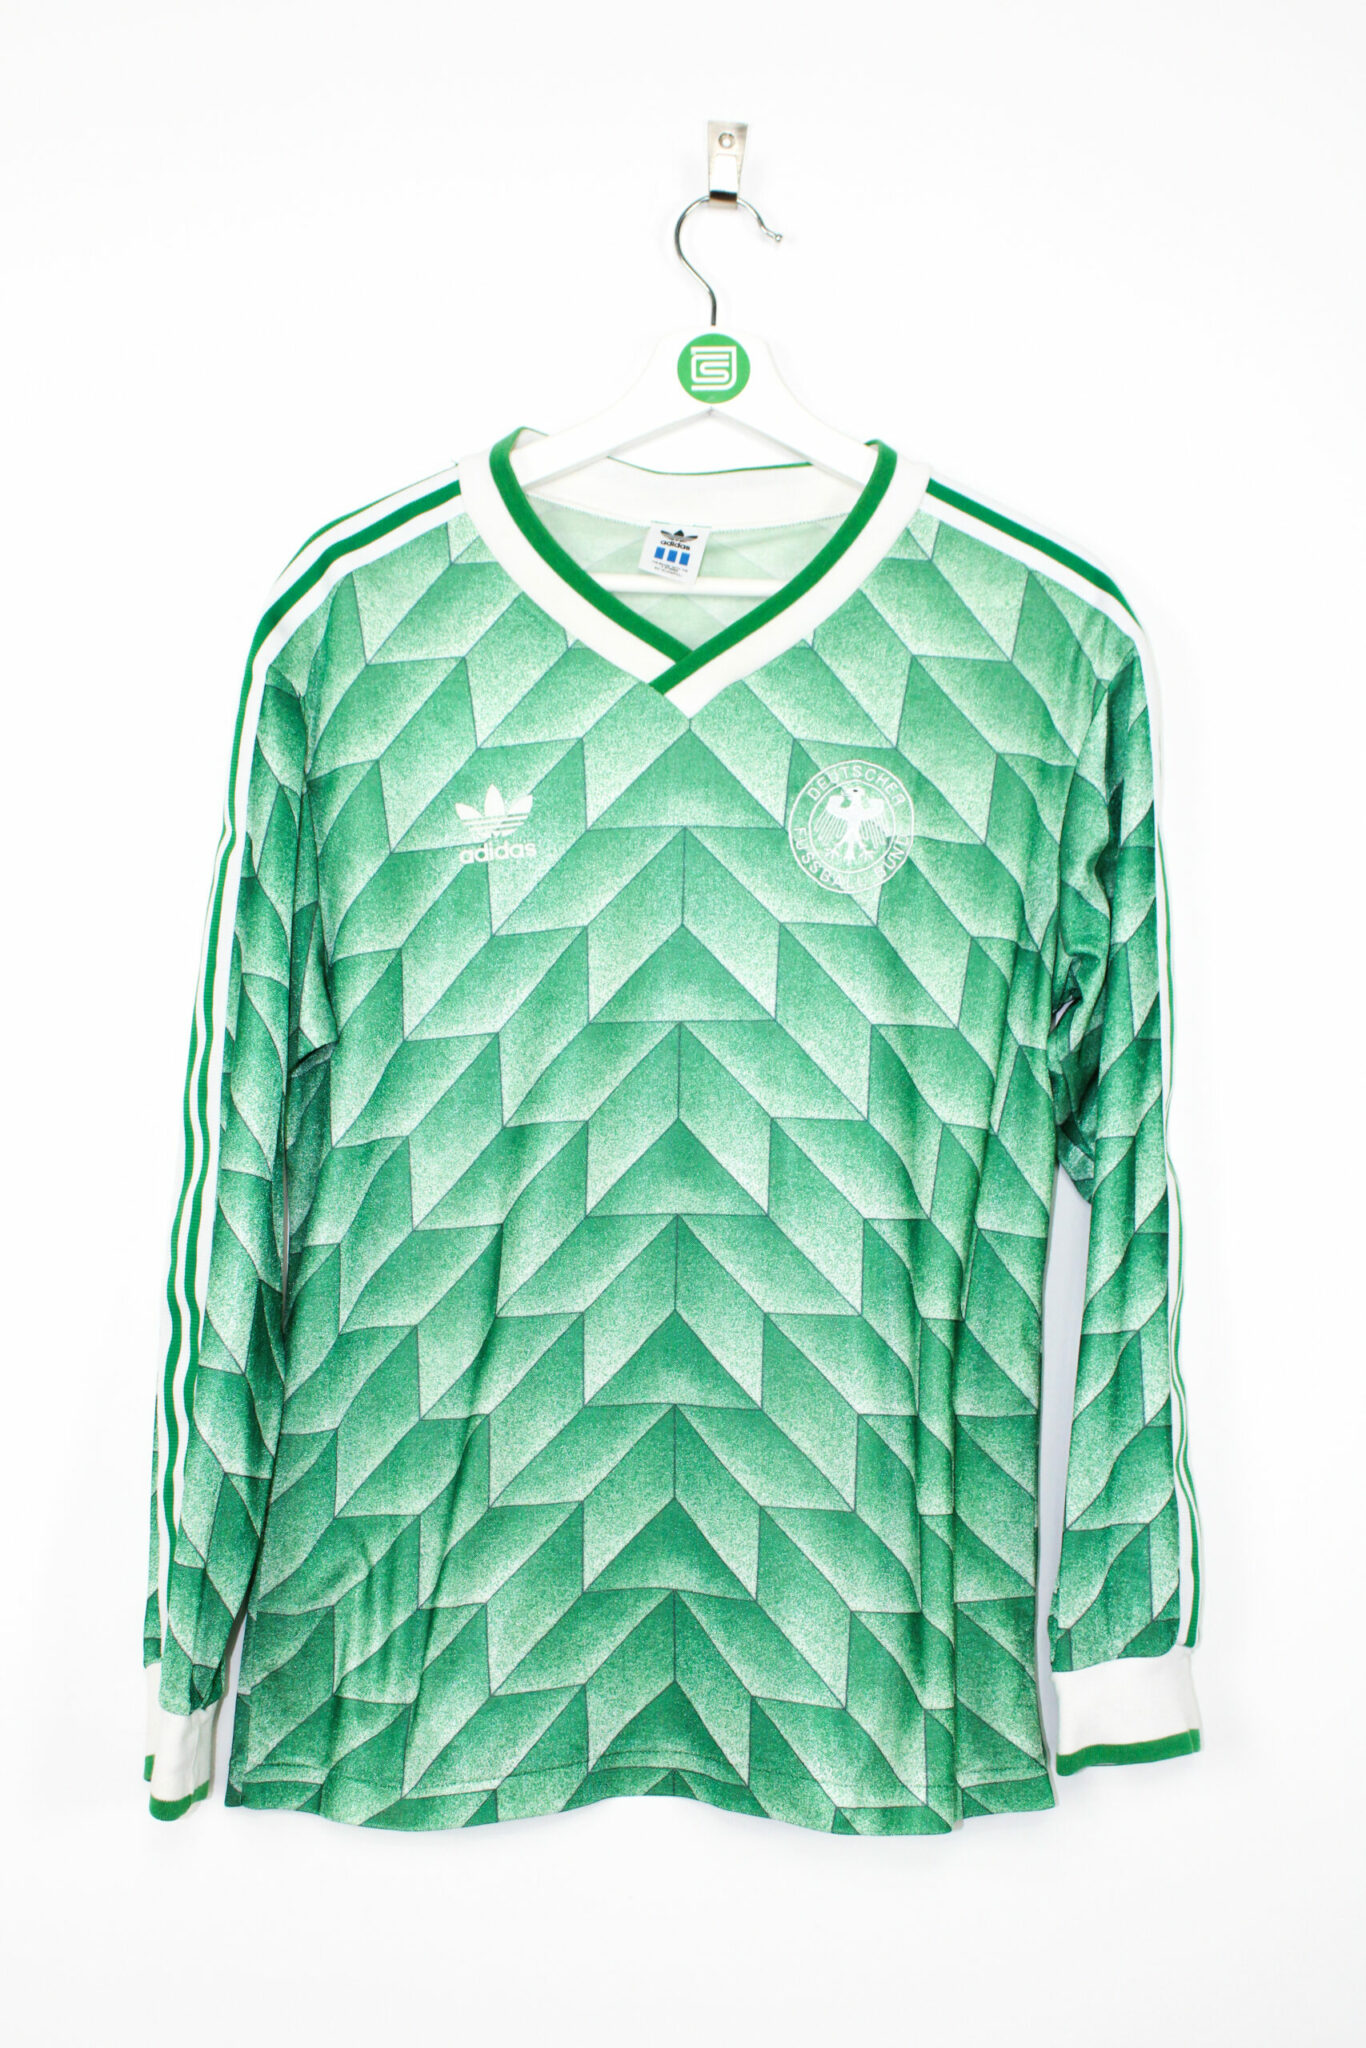 Germany Green Jersey 1990,Retro Green Germany Jersey,1990 world cup Germany  away green soccer jerseys